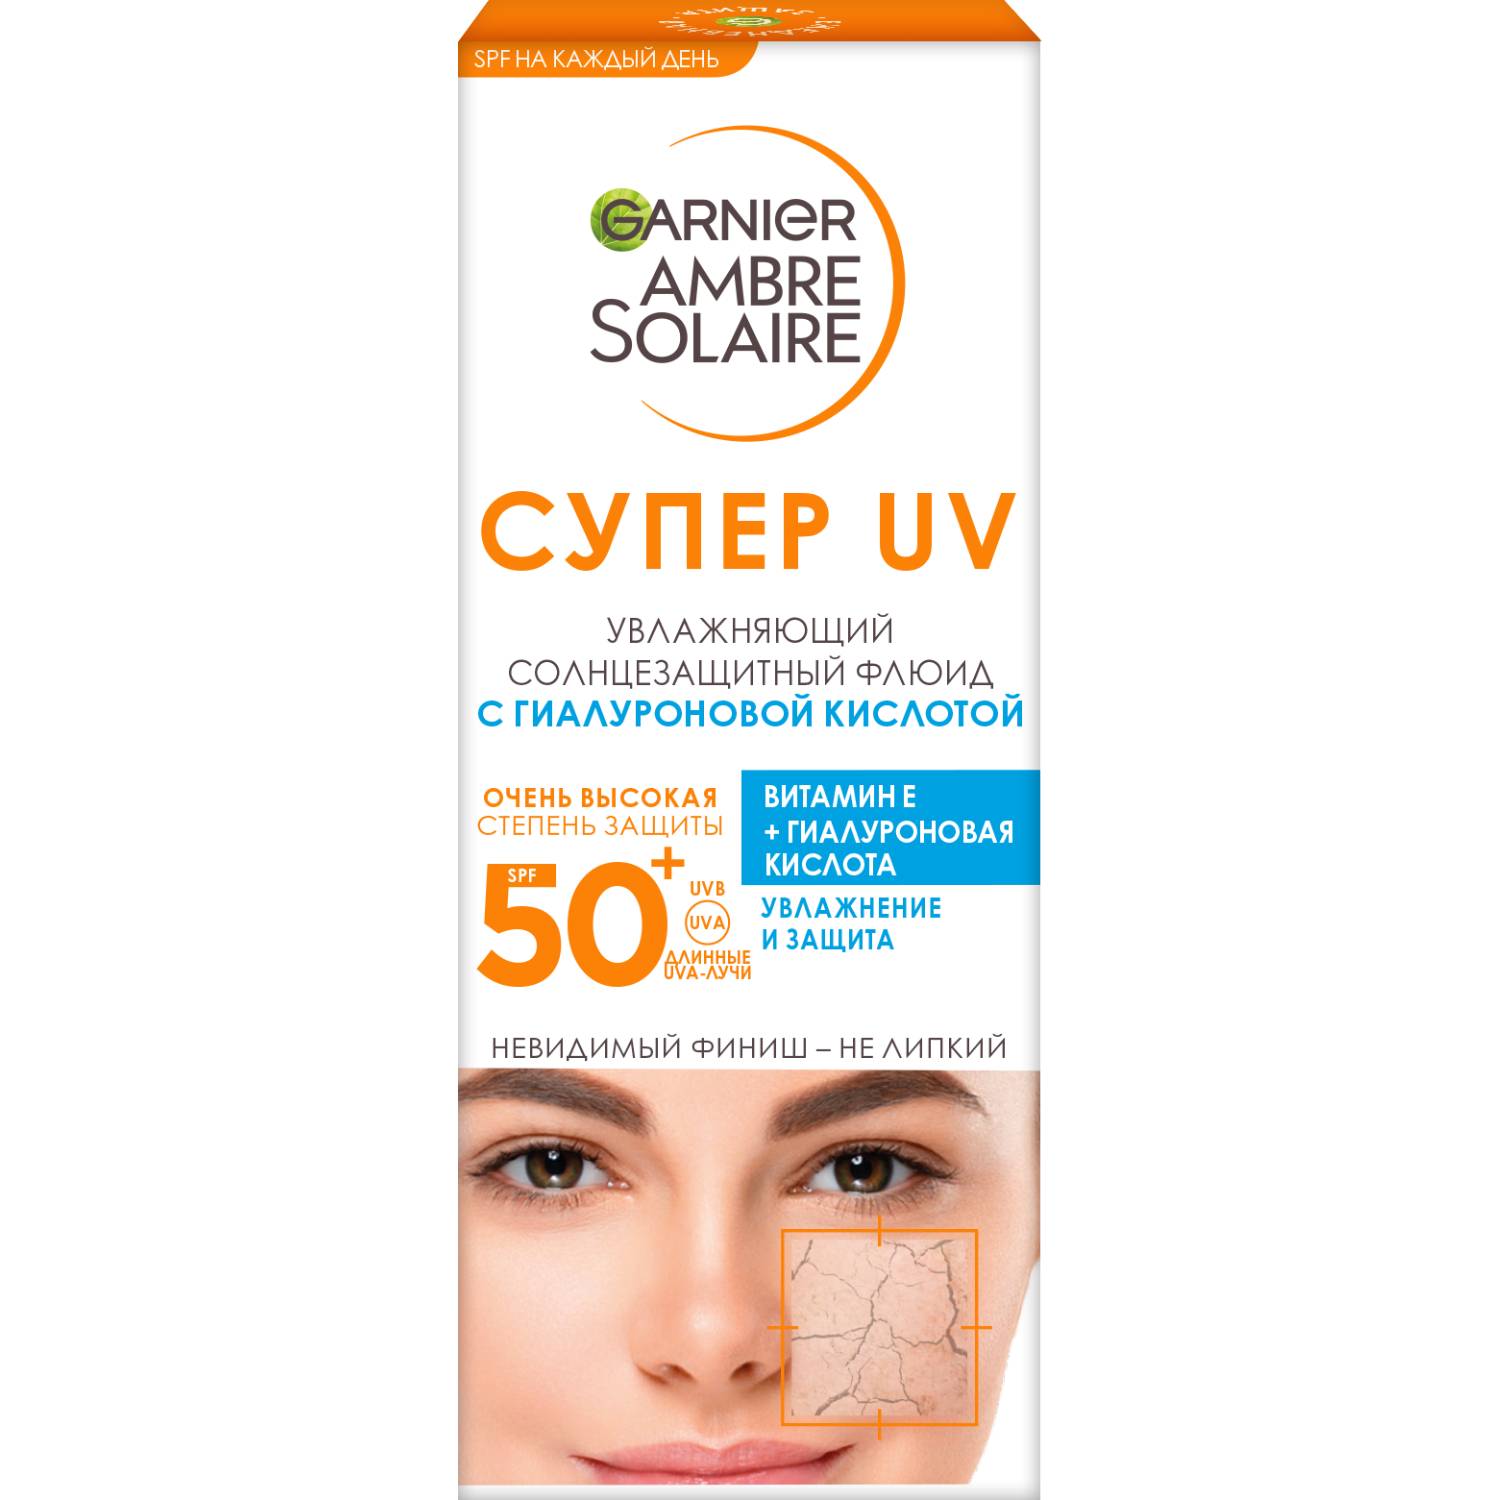 Garnier Увлажняющий солнцезащитный флюид для лица Super UV SPF50+ с гиалуроновой кислотой, 40 мл (Garnier, Amber solaire)